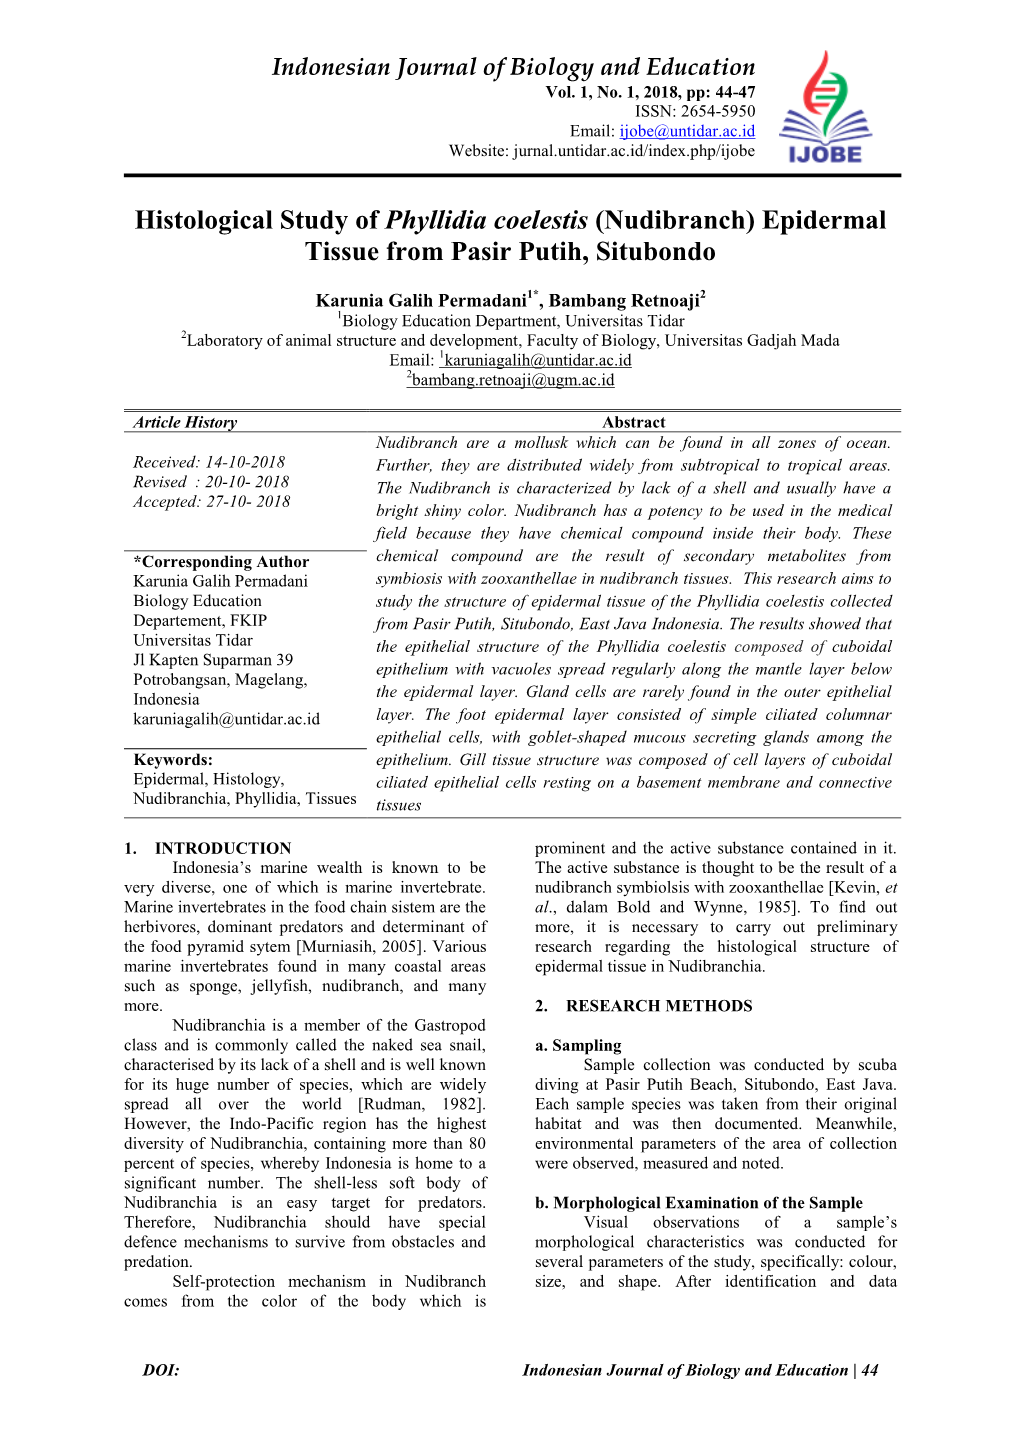 Histological Study of Phyllidia Coelestis (Nudibranch) Epidermal Tissue from Pasir Putih, Situbondo